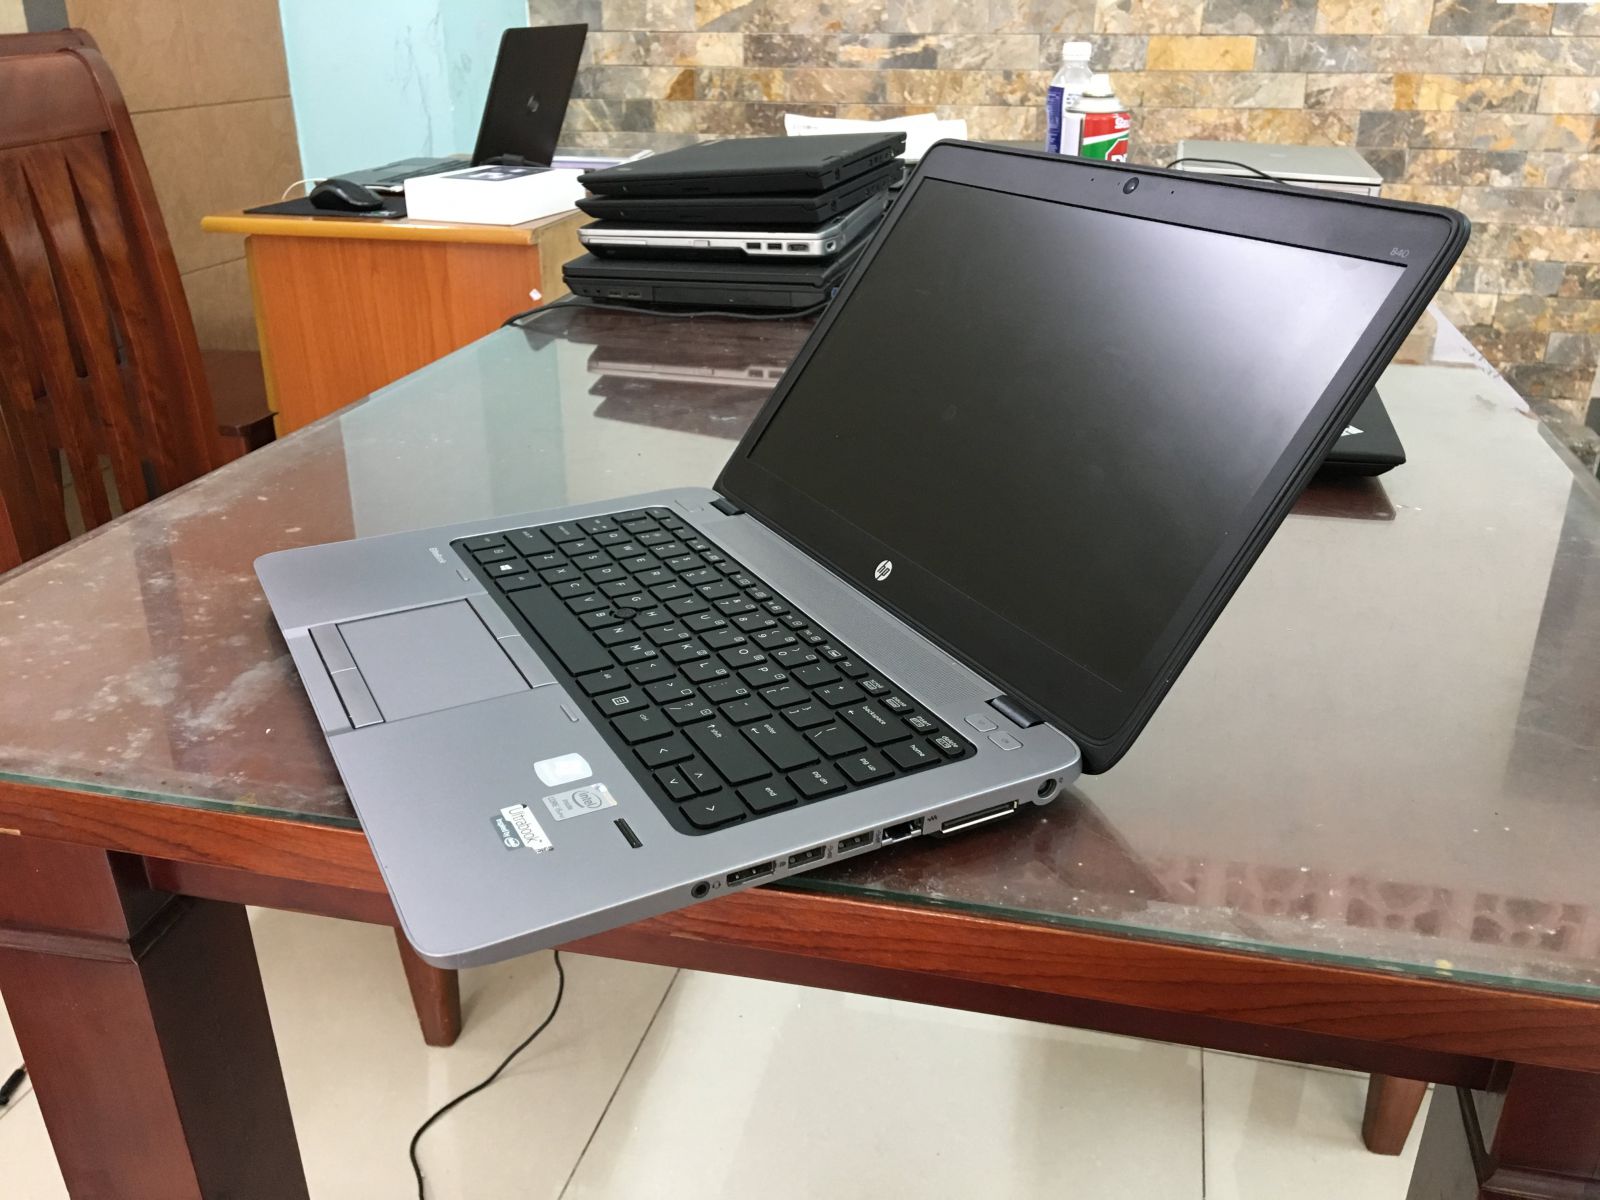 HP EliteBook 820 G1 (Core i7-4600U , Ram 4GB, HDD 320GB, Màn Hình 12.5 inch)